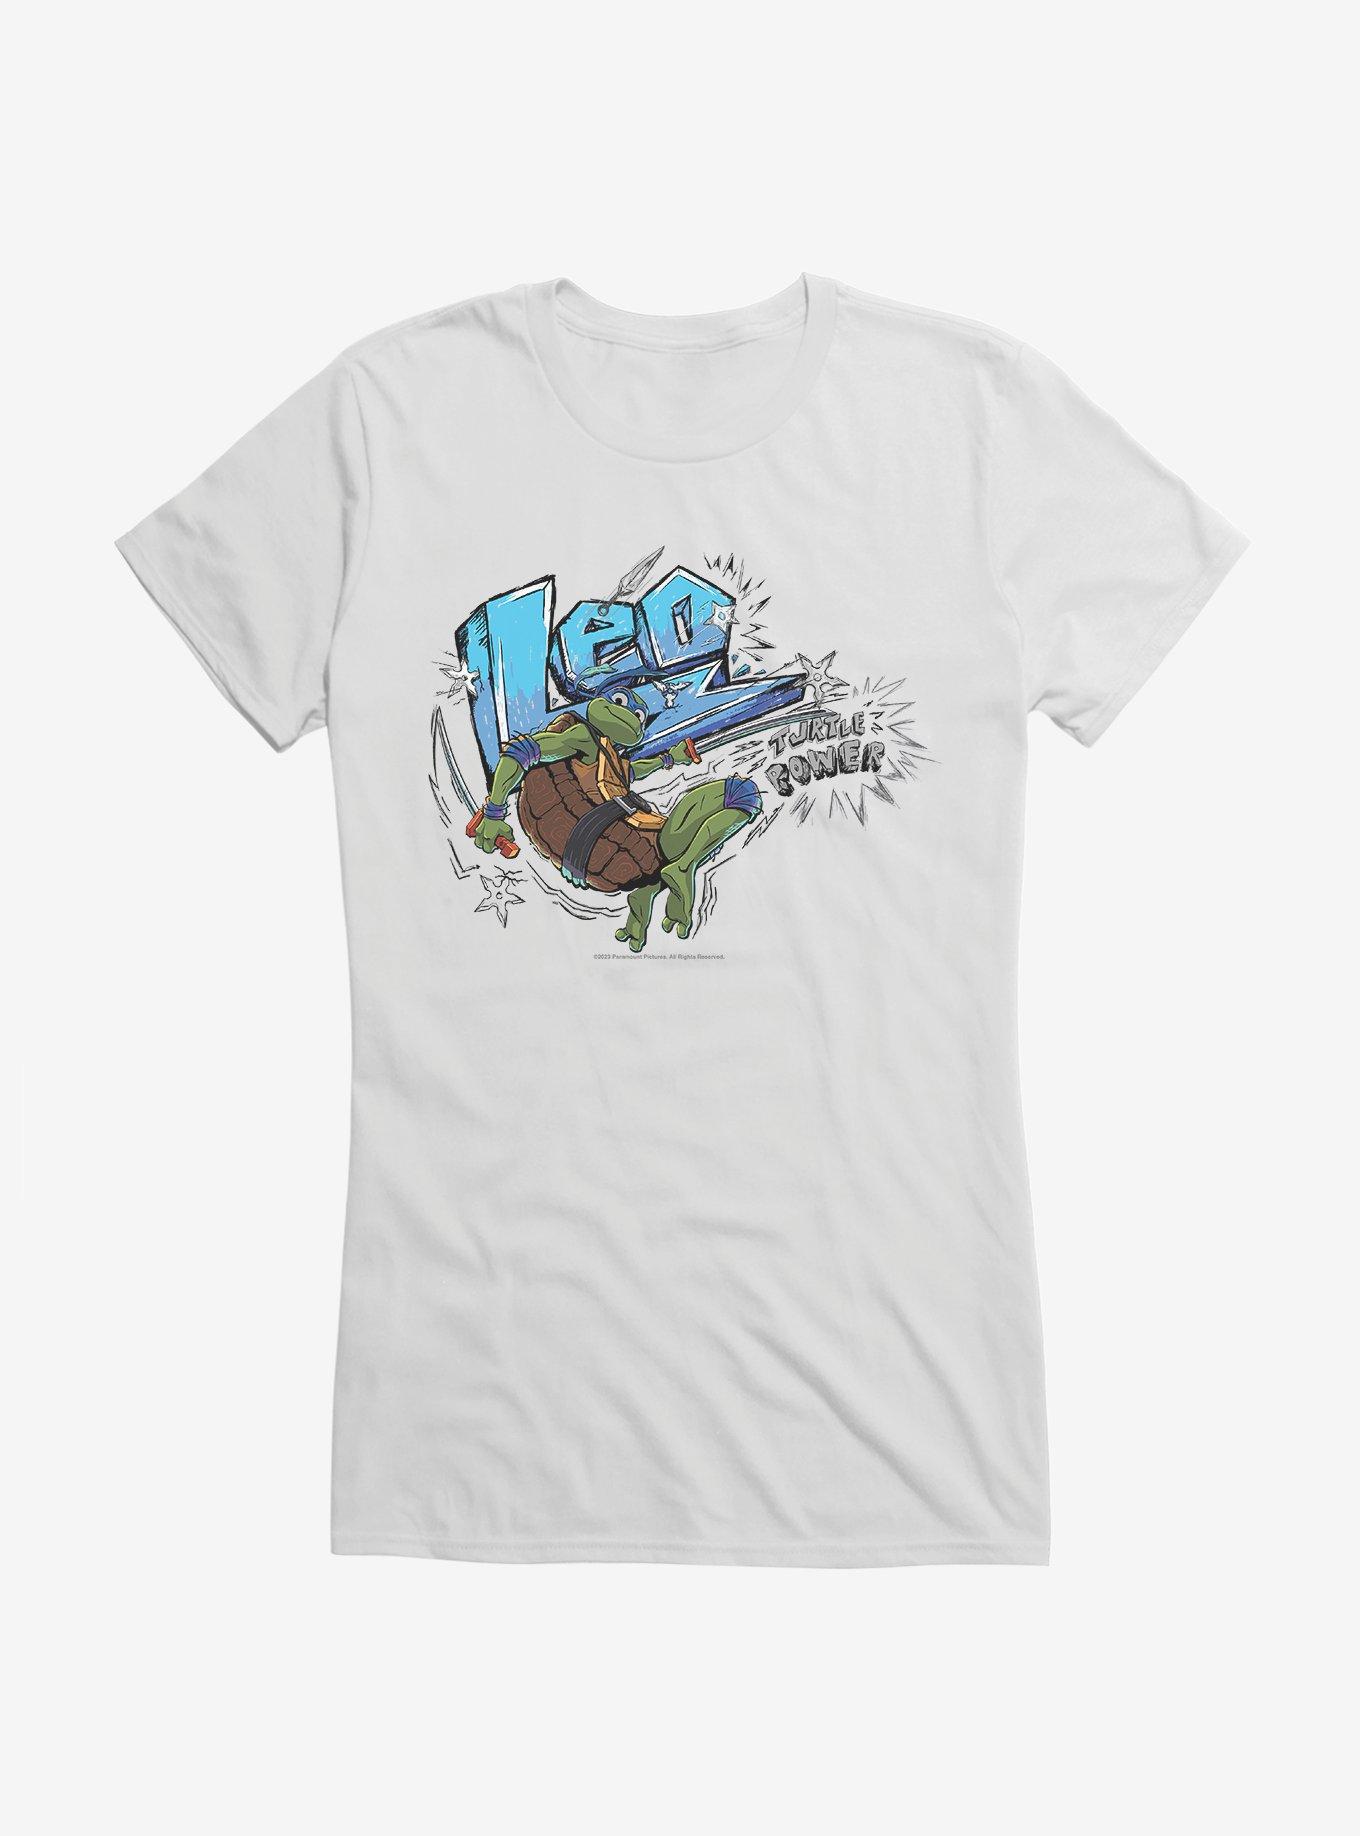 Teenage Mutant Ninja Turtles Turtle Power T-Shirt 100% Cotton / L / Green